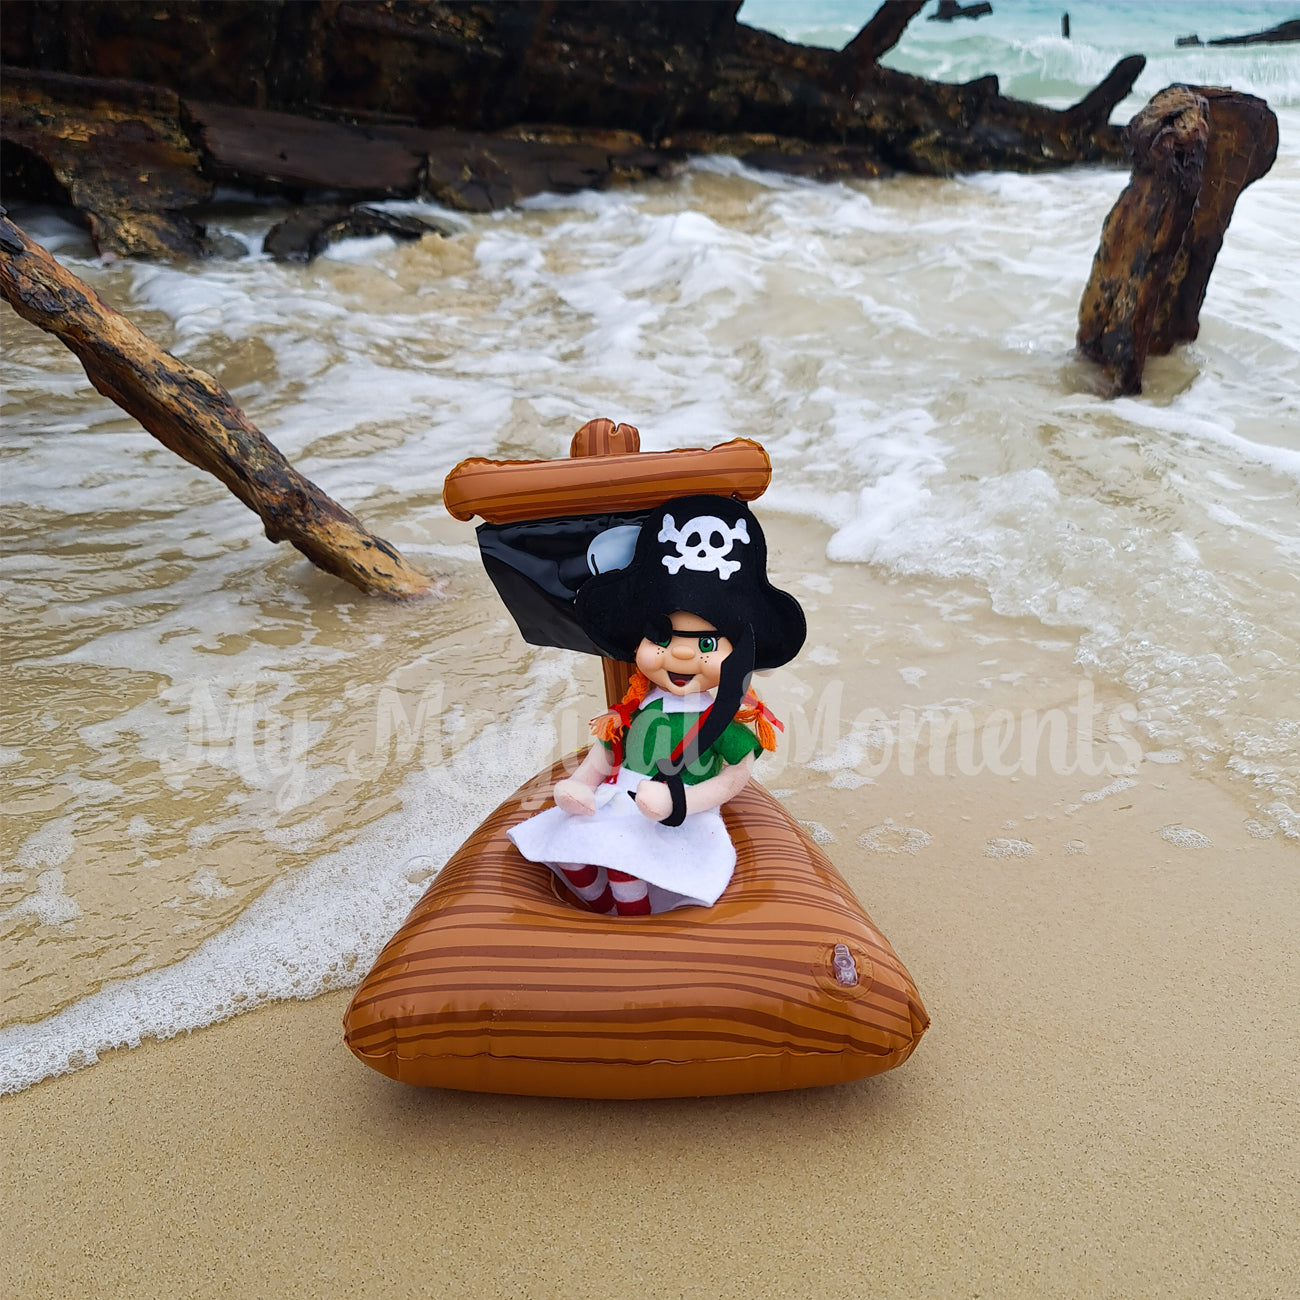 Girl elf dressed in a pirate costume on beach